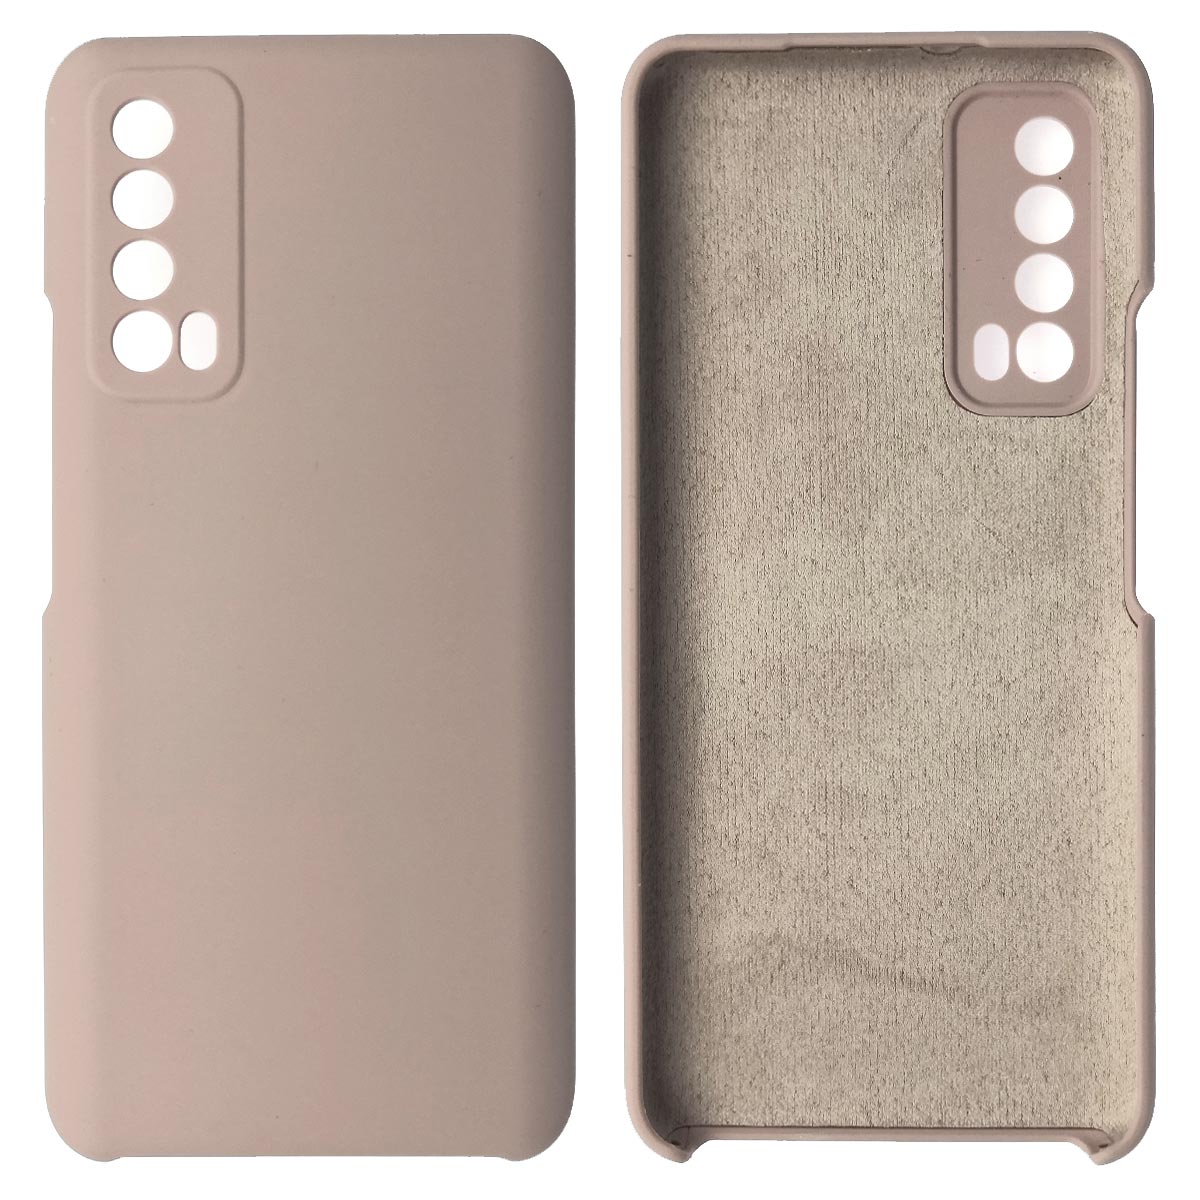 Чехол накладка Silicon Cover для HUAWEI P Smart 2021, силикон, бархат, цвет розовый песок